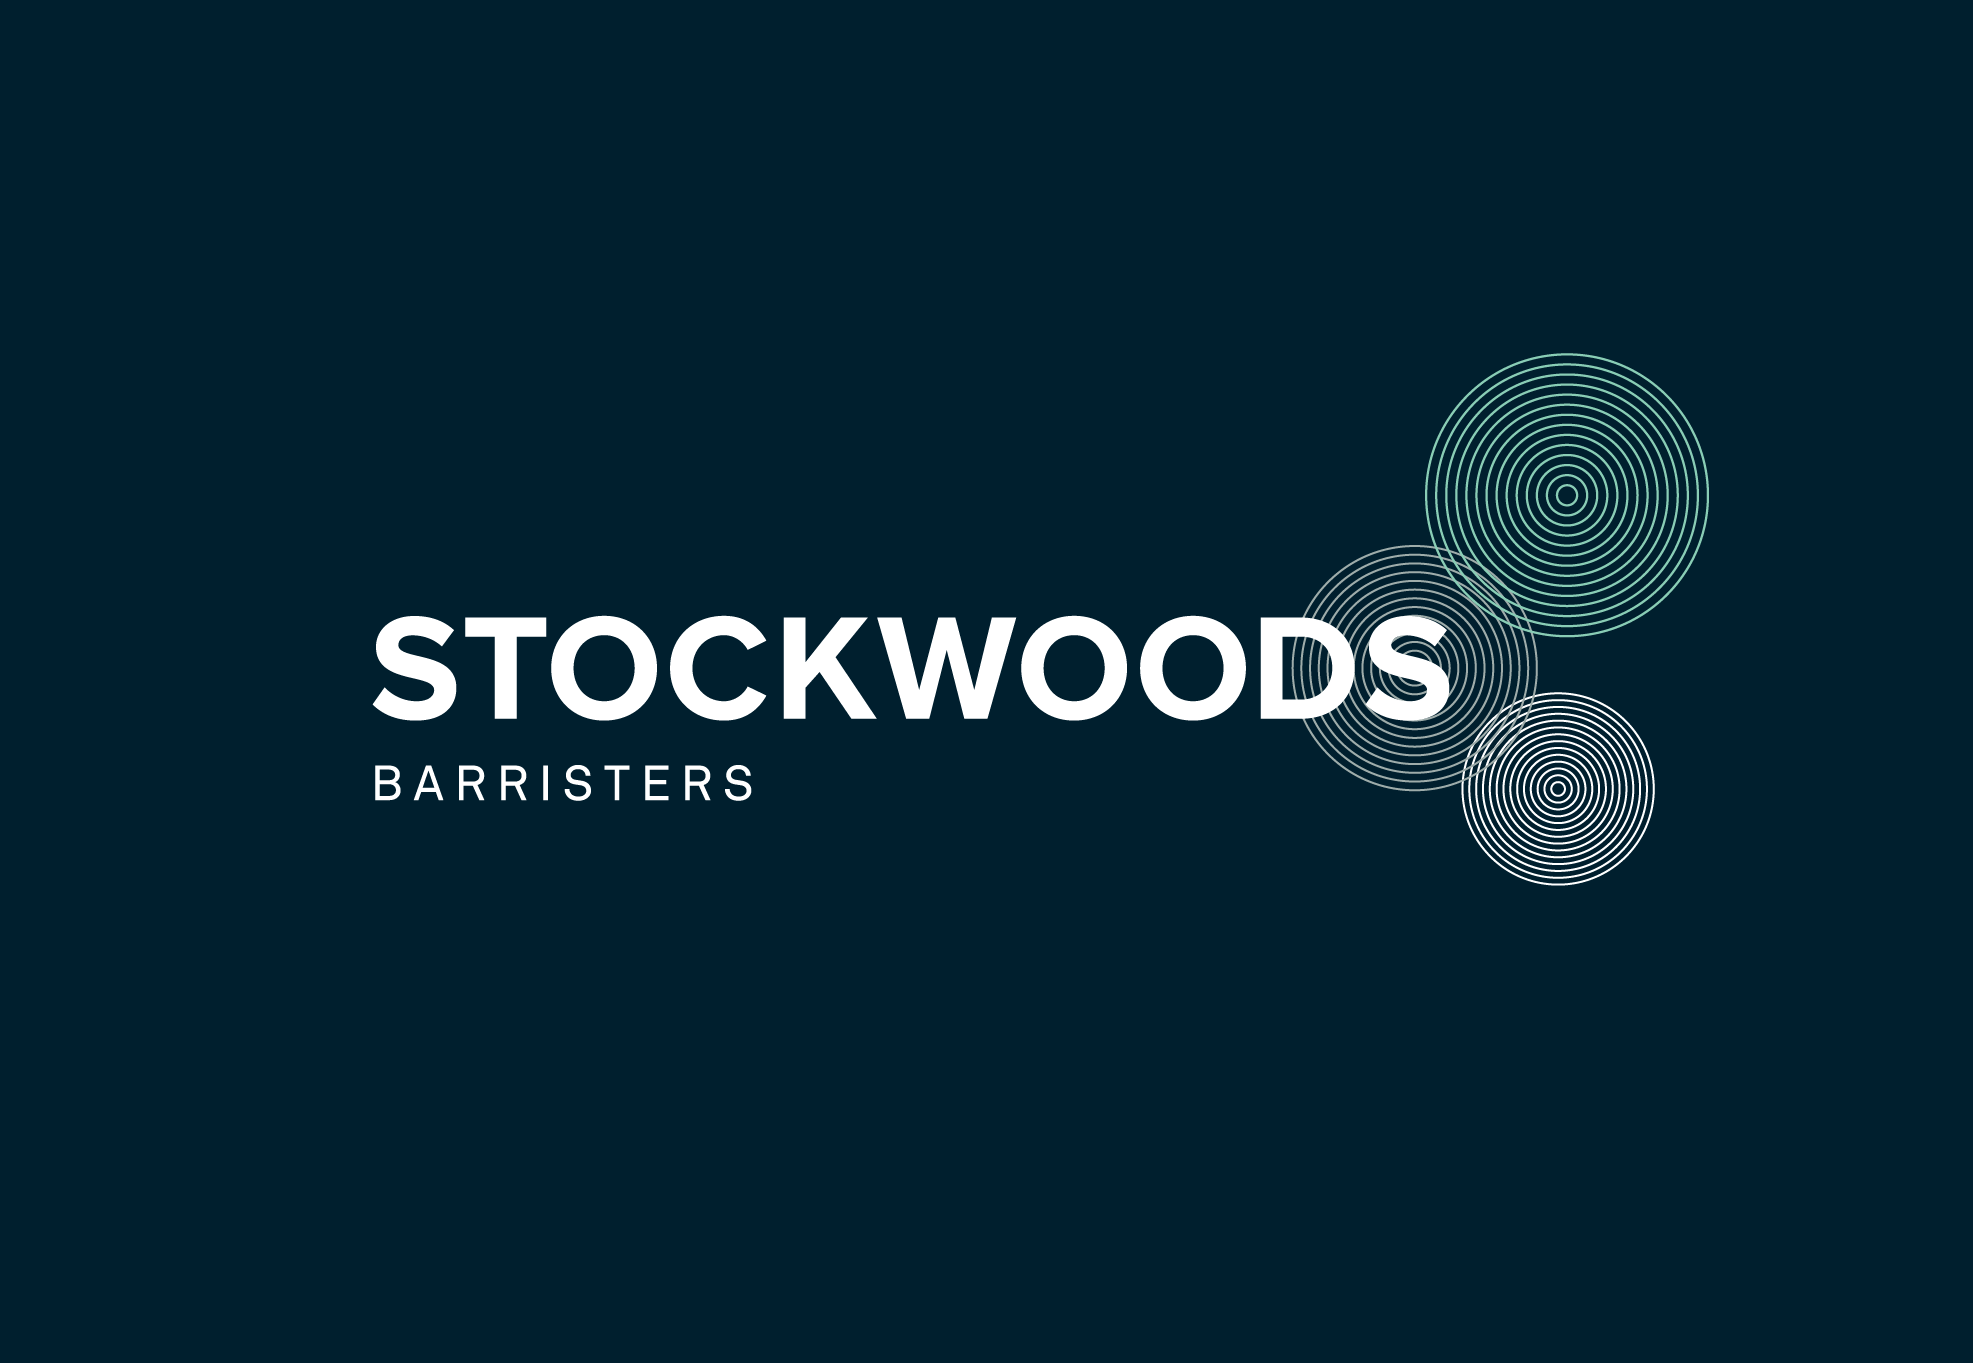 Stockwoods LLP